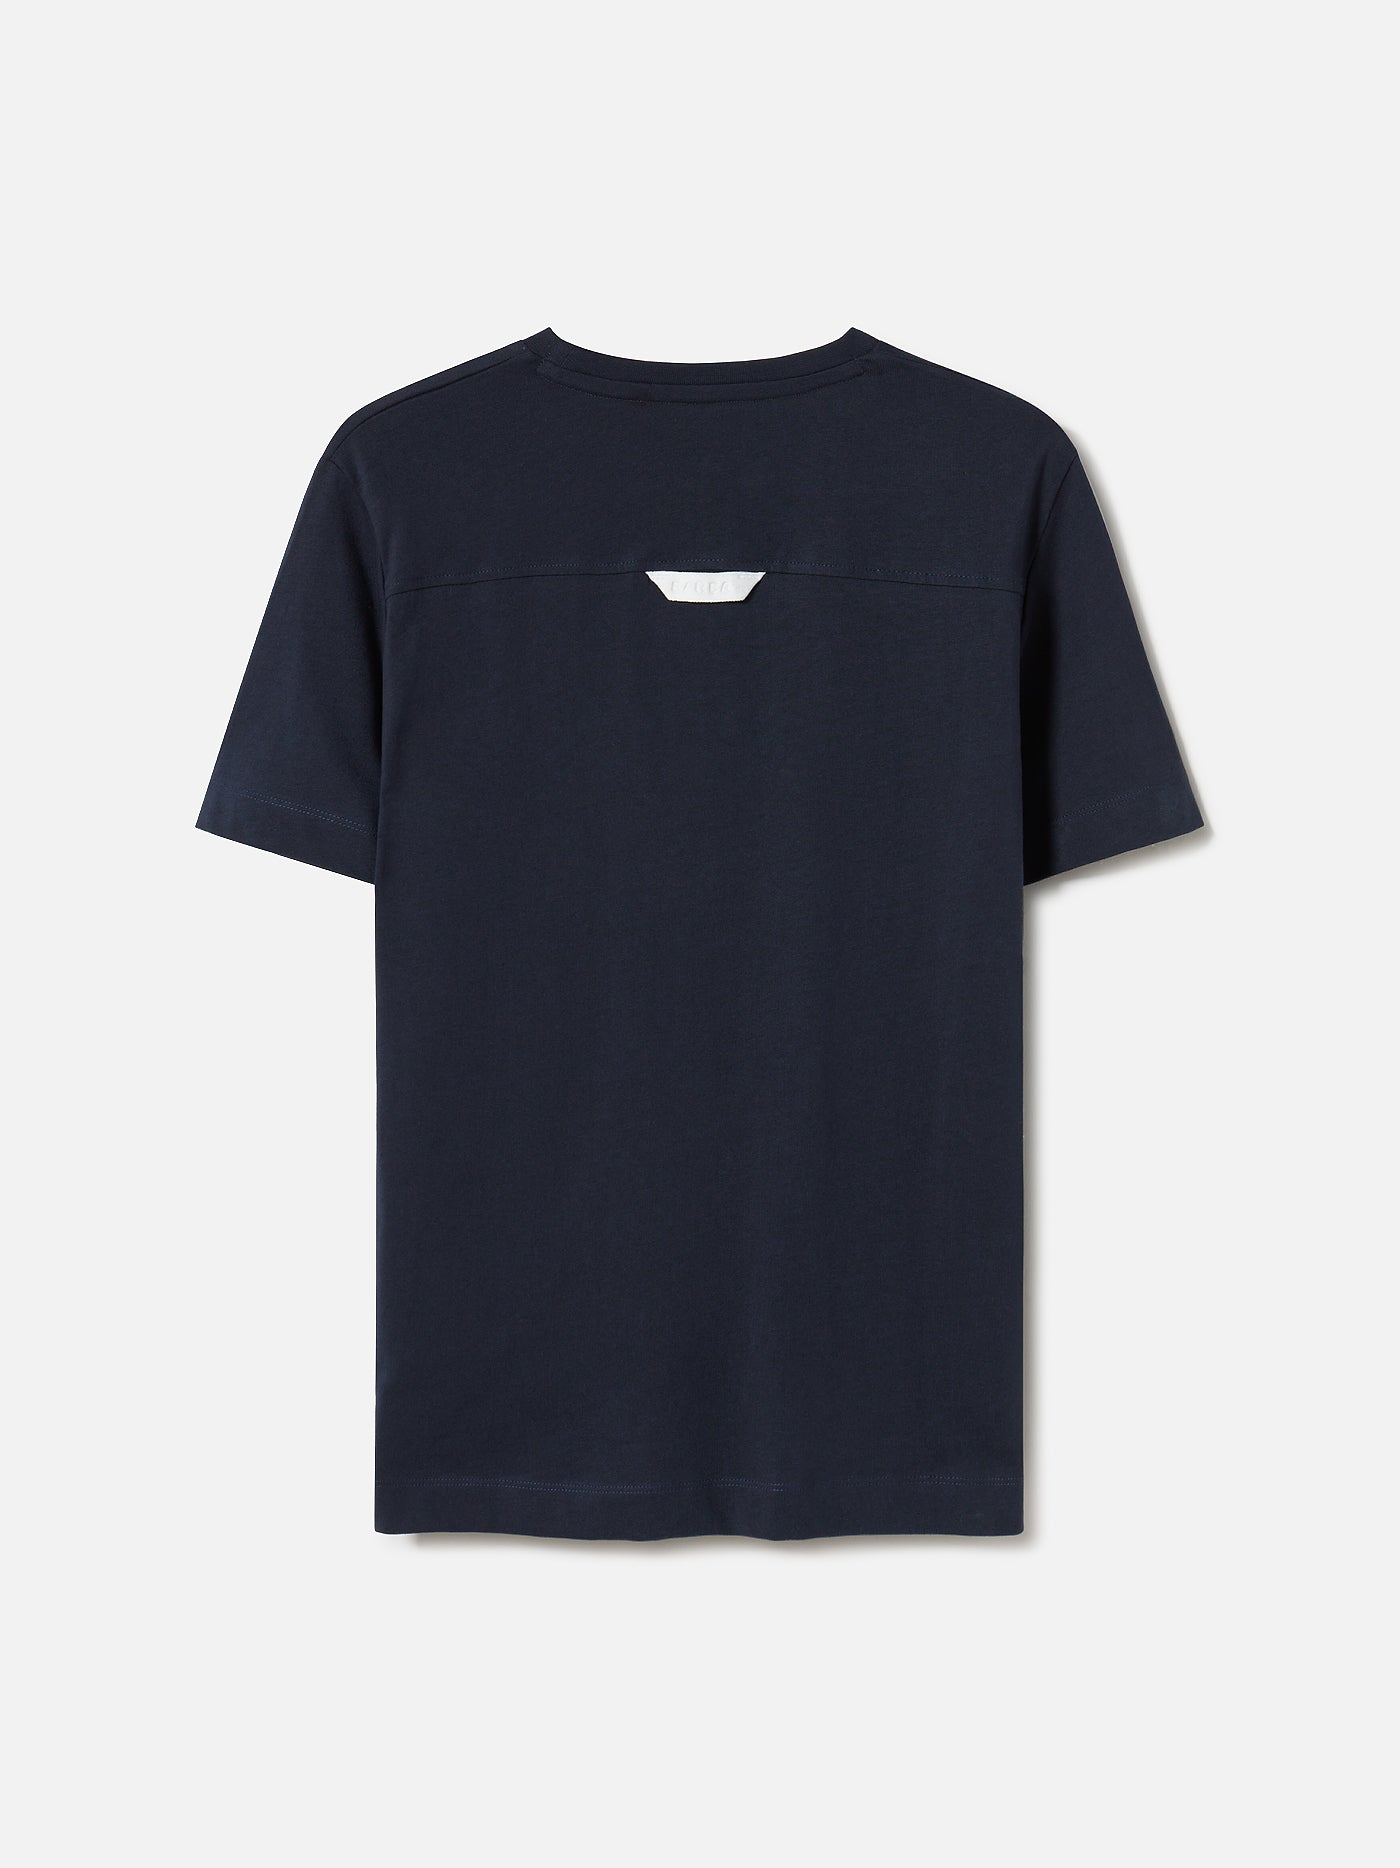 Camiseta azul marino Barça - Mujer